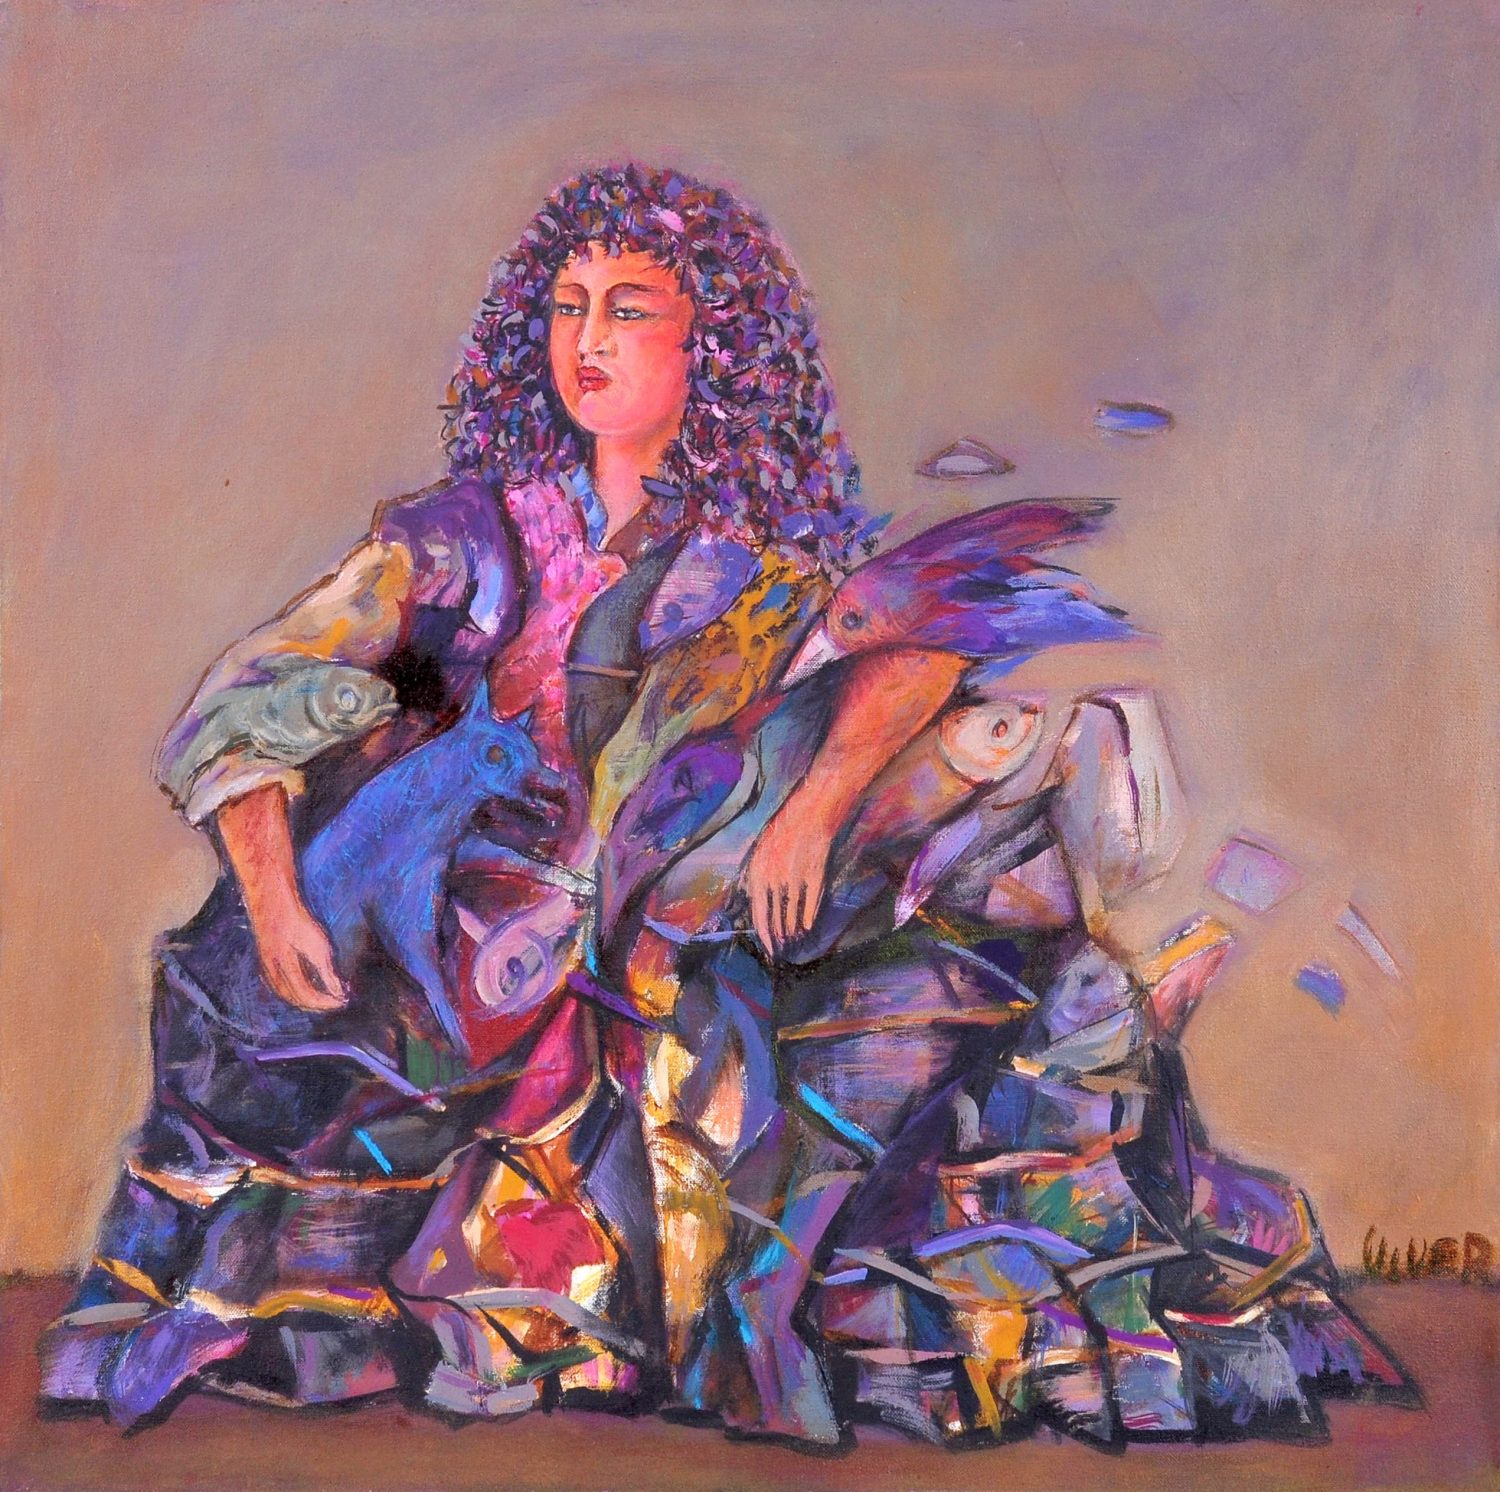 thumbnail of Menina Quiteña by Ecuadorian artist Carlos Viver. medium: acrylic on canvas. Dimensions: 23.6 x 23.6 inches. date: 1968